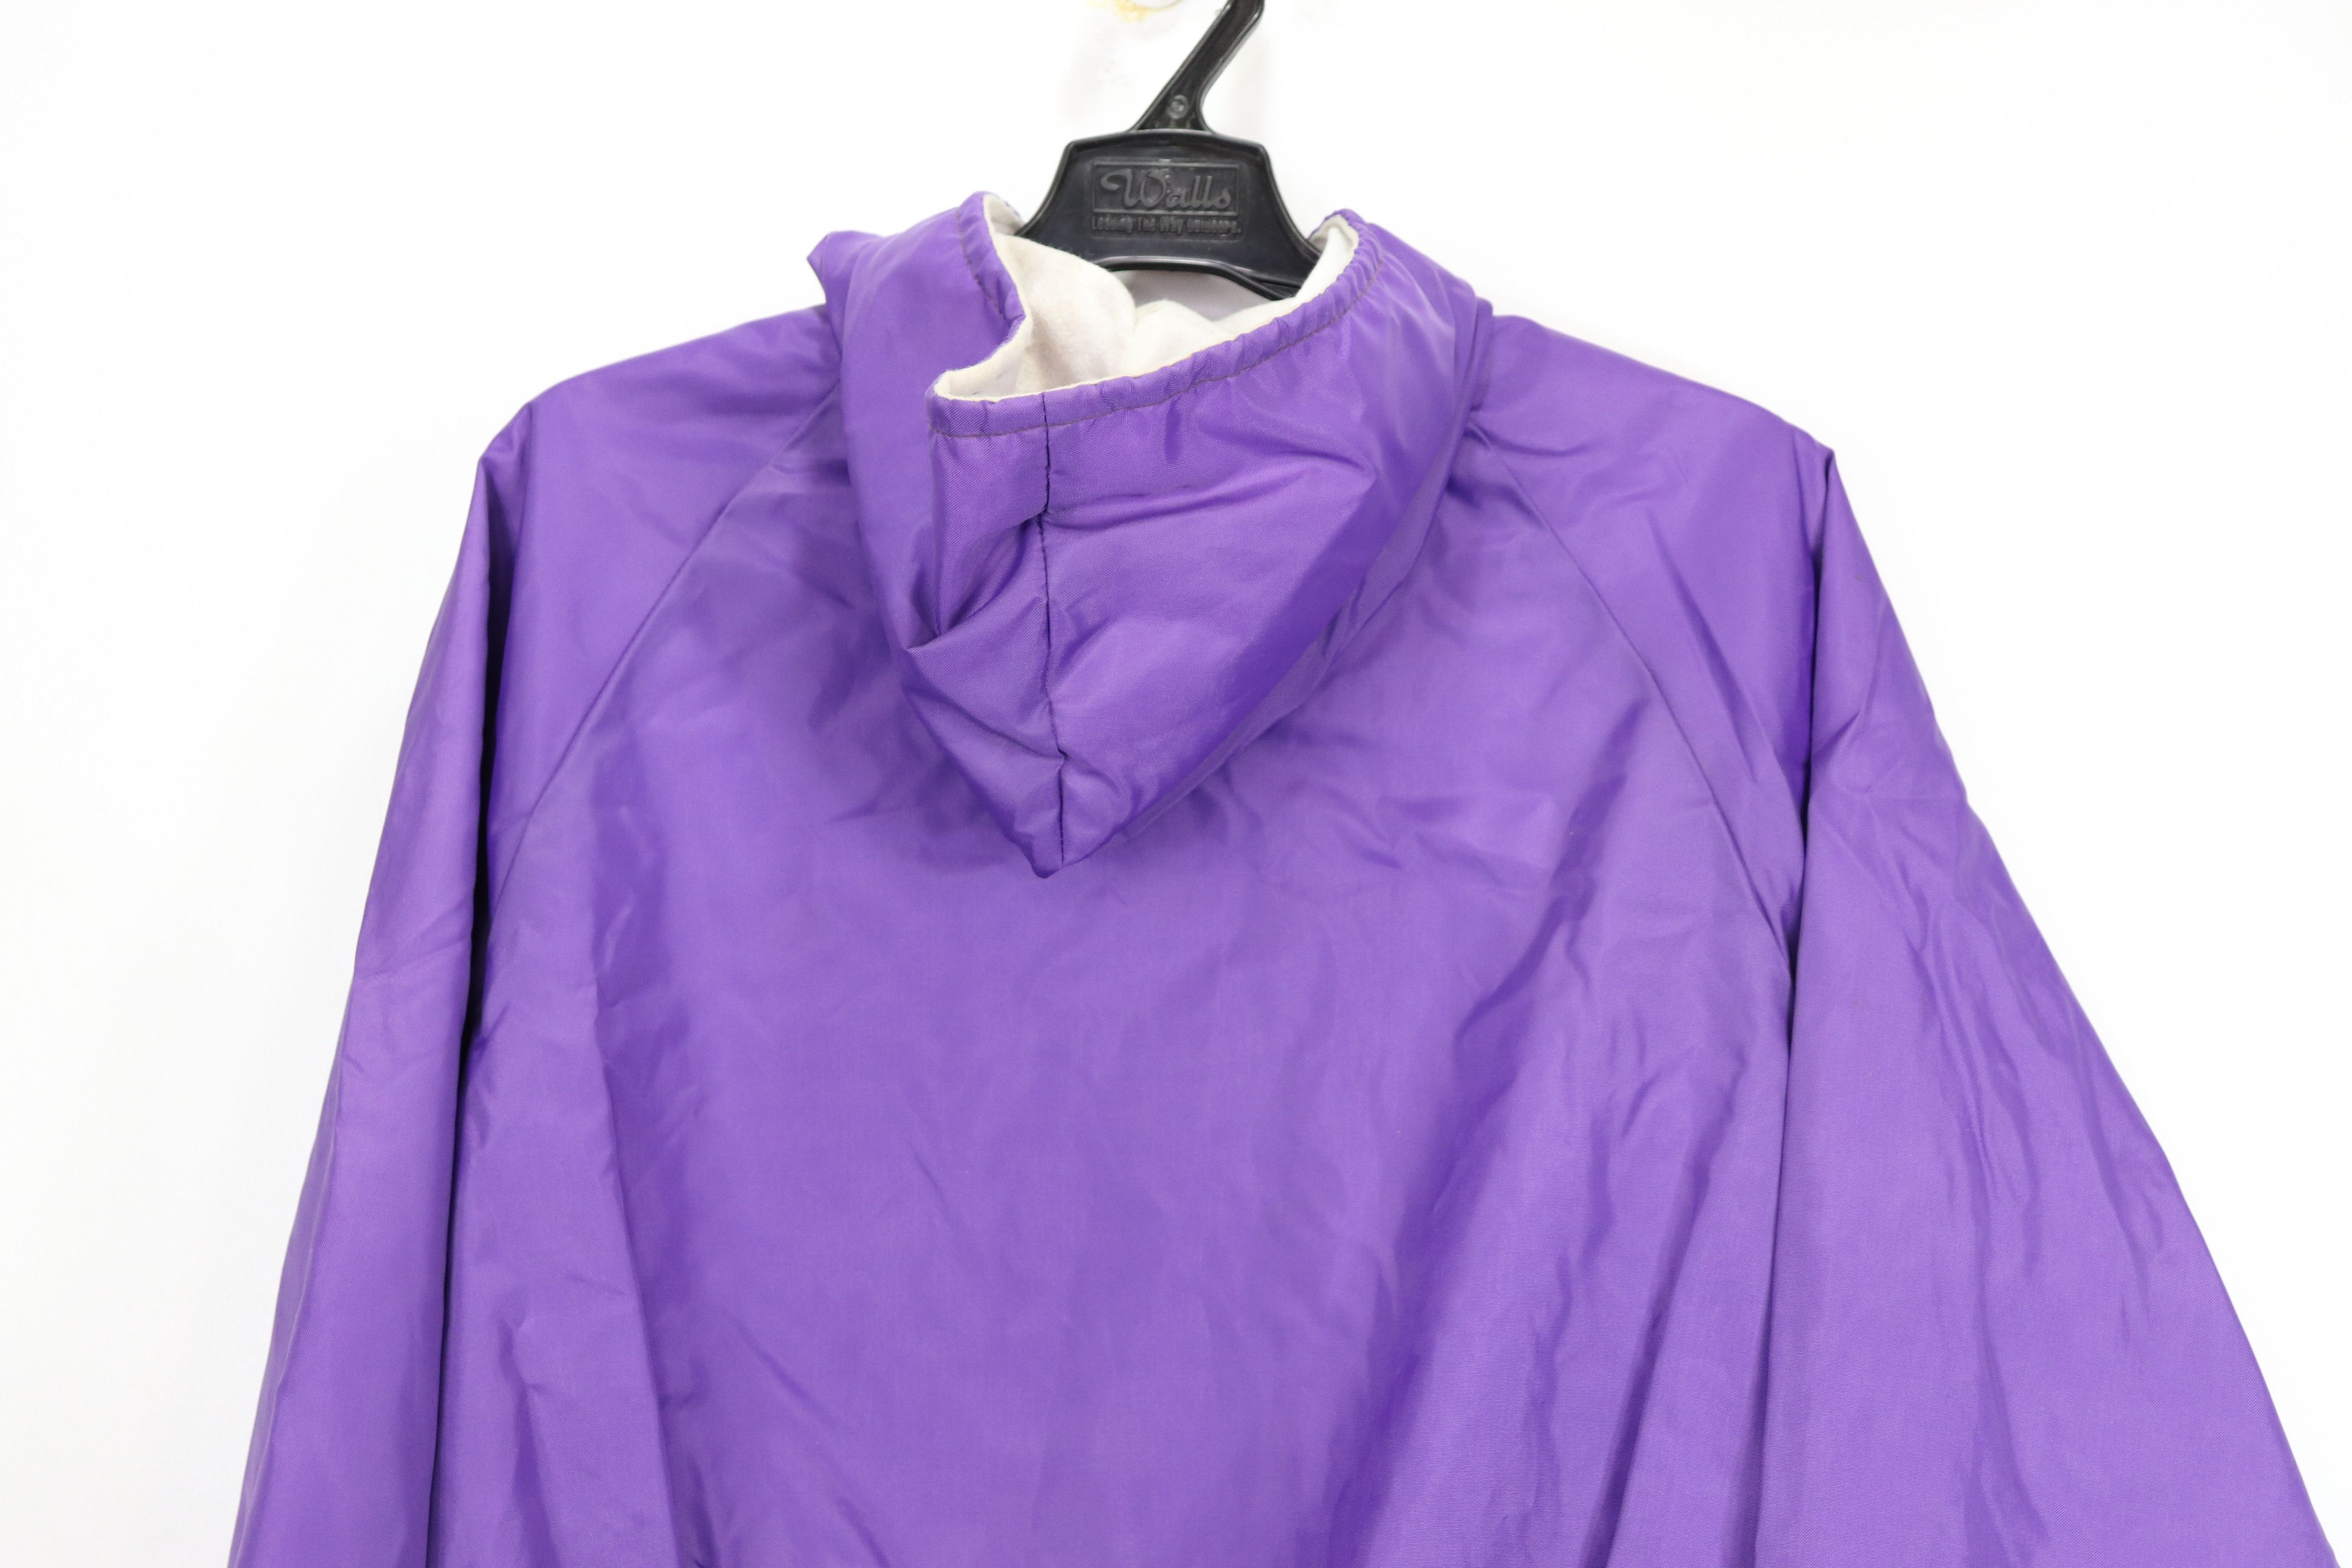 Vintage 80s Clarkfield Mens Medium Button Front Lined Hooded Varsity Jacket Purple Size US M / EU 48-50 / 2 - 5 Thumbnail